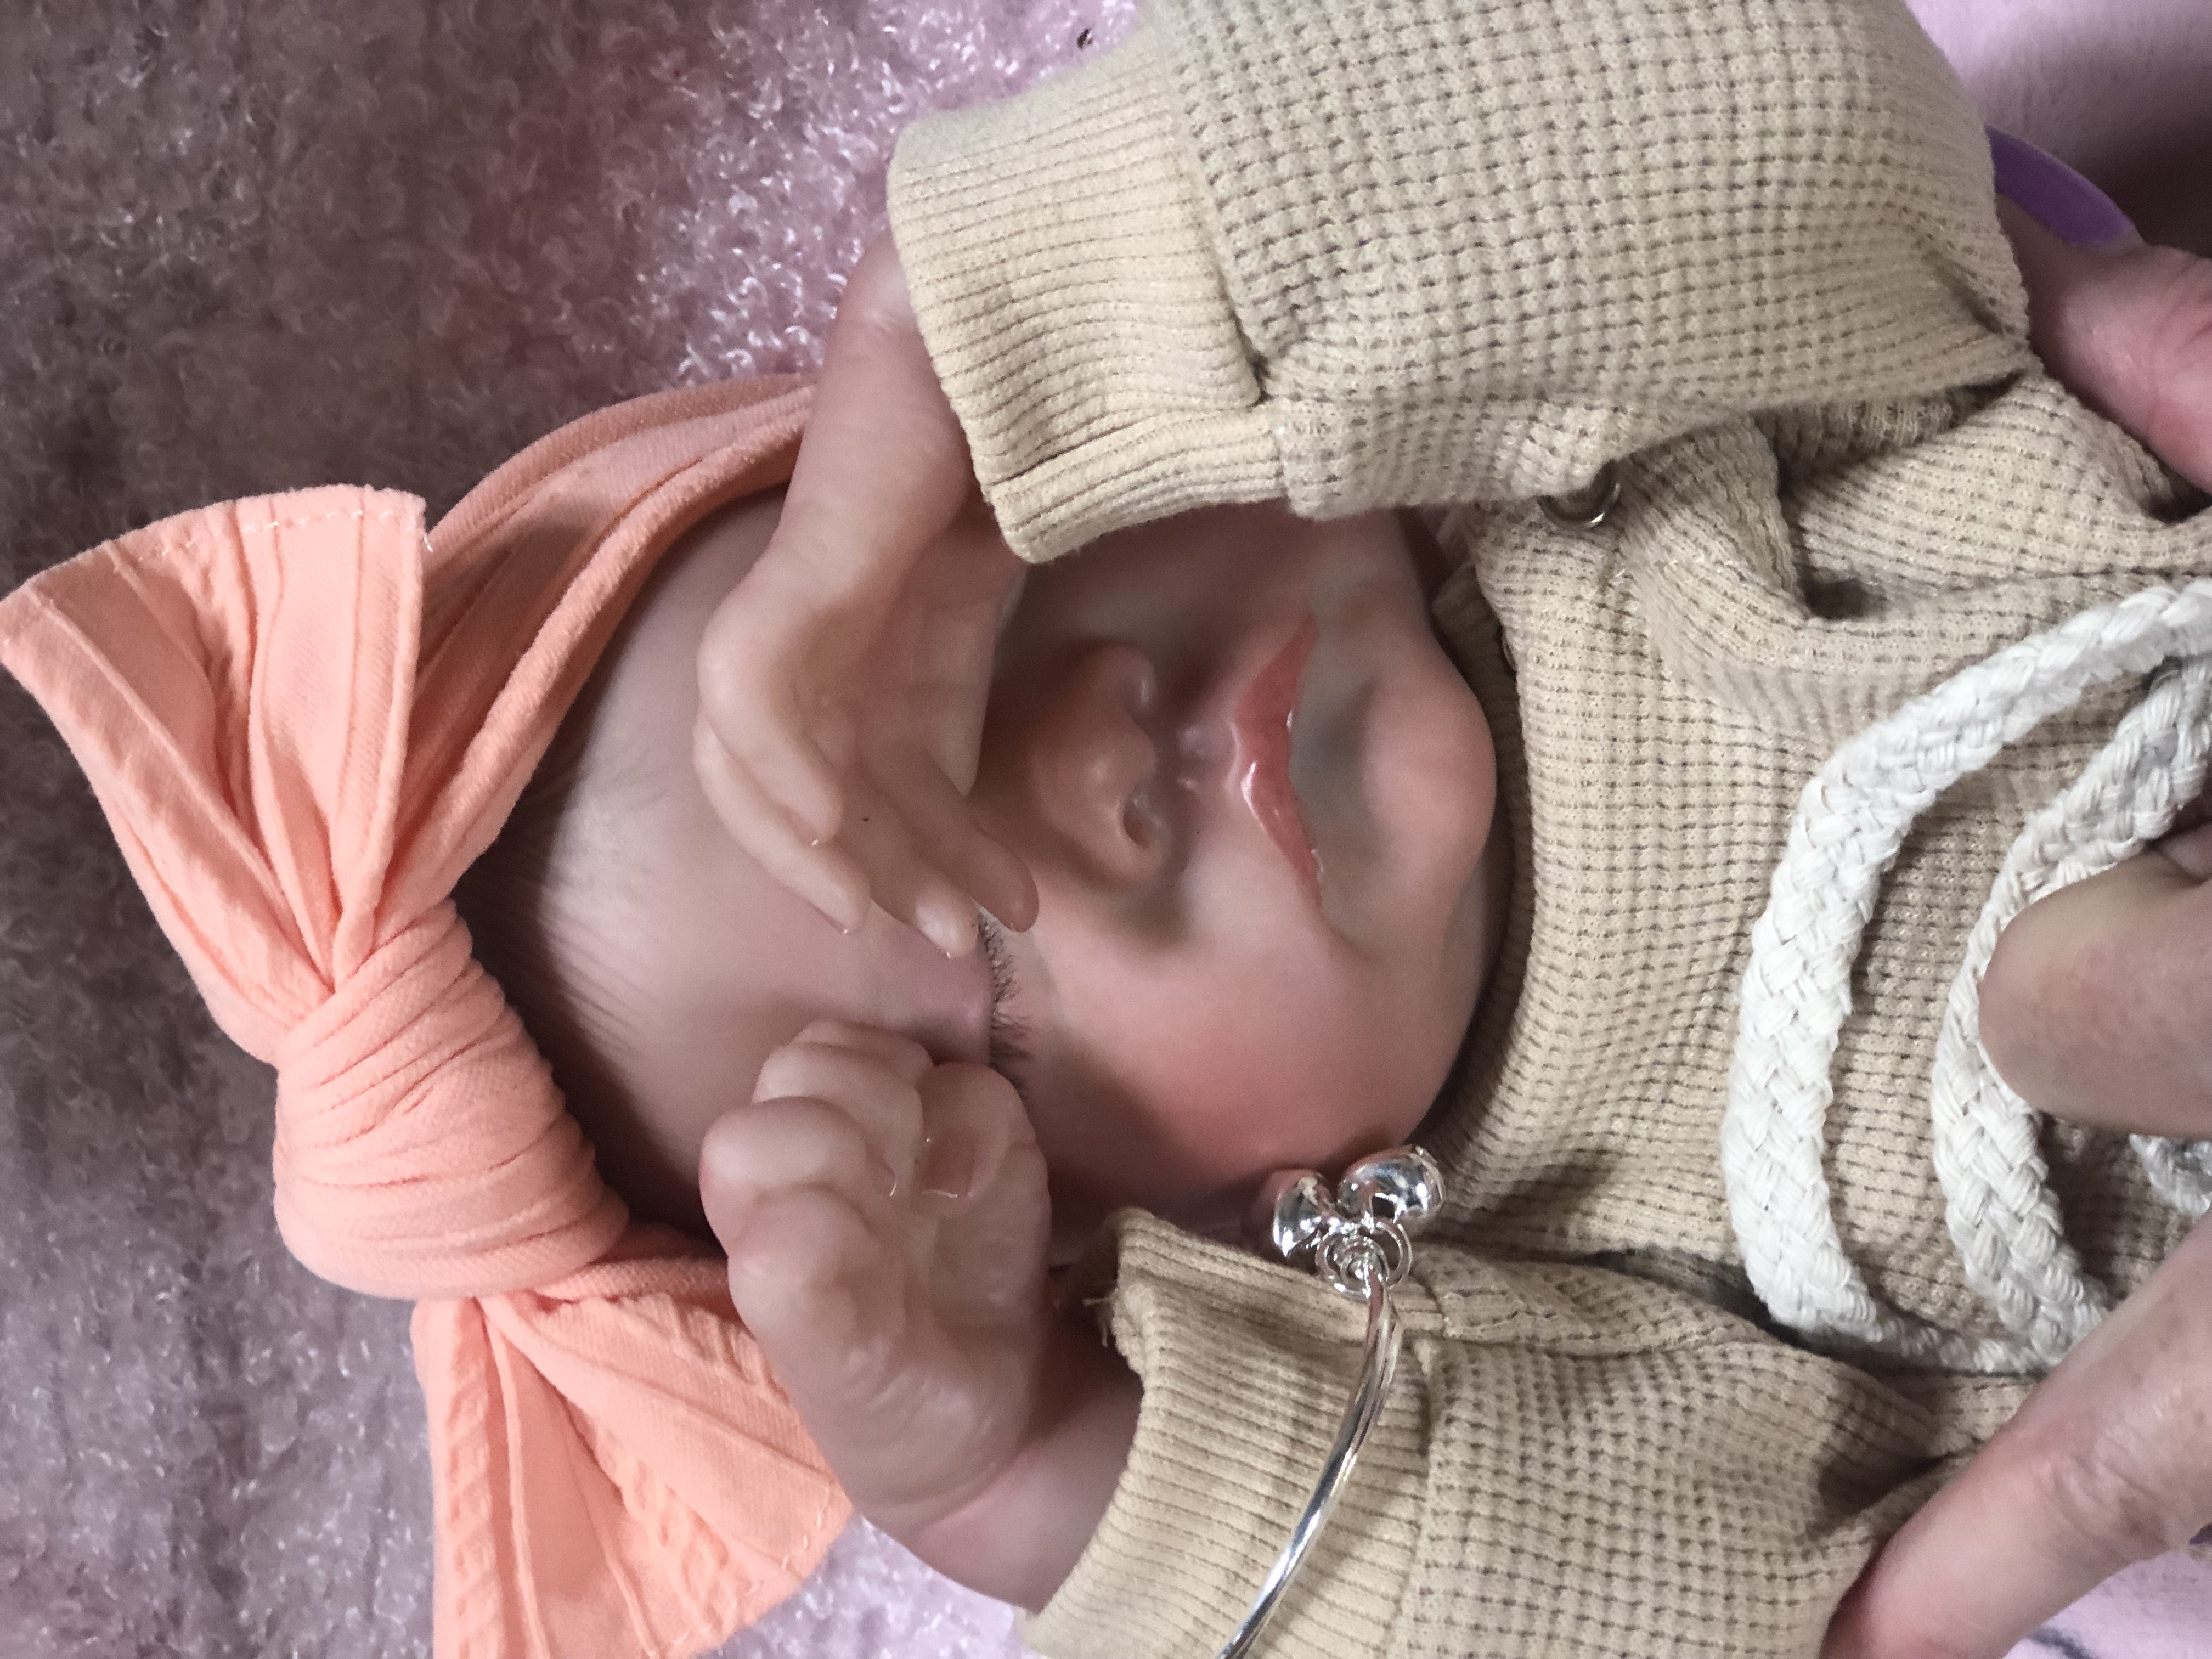 Boneca Bebê Reborn Realista Barata Corpo de Silicone Completa